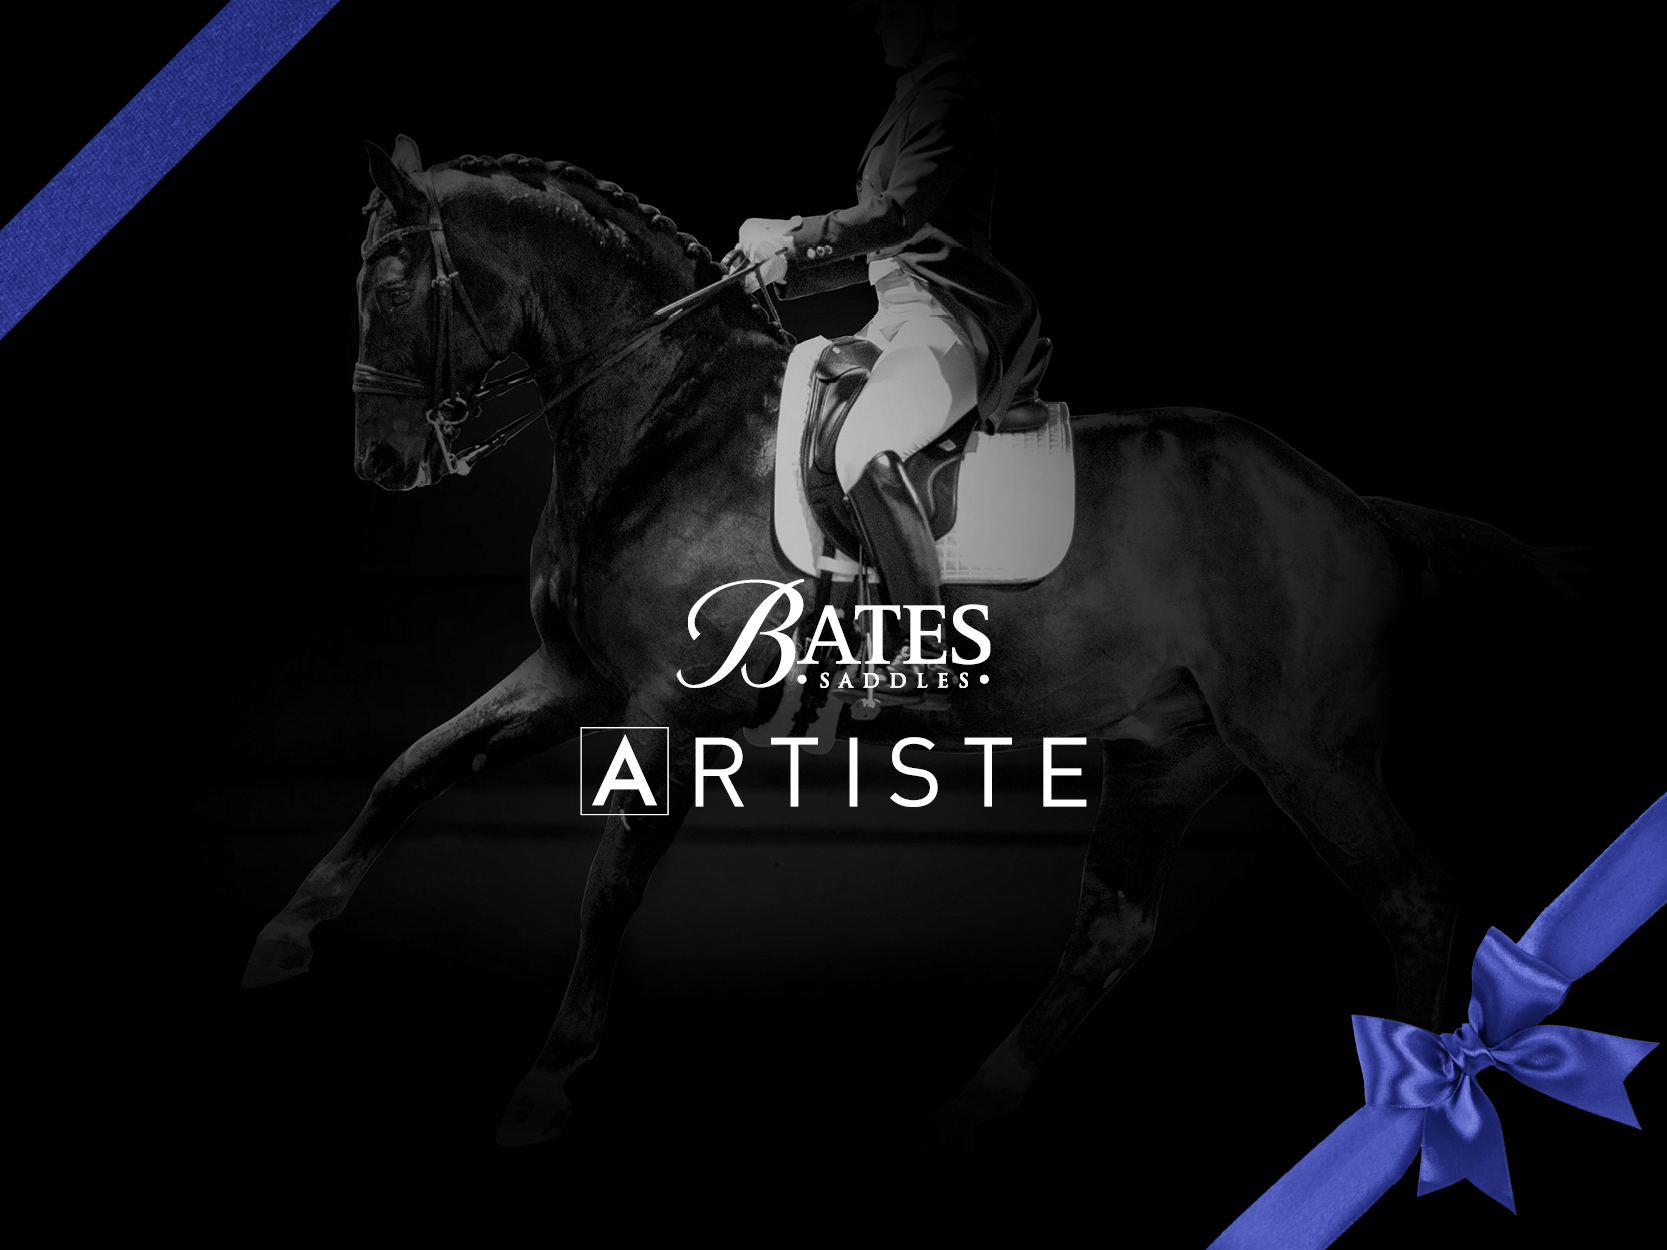 Introducing the NEW Bates Artiste dressage saddle